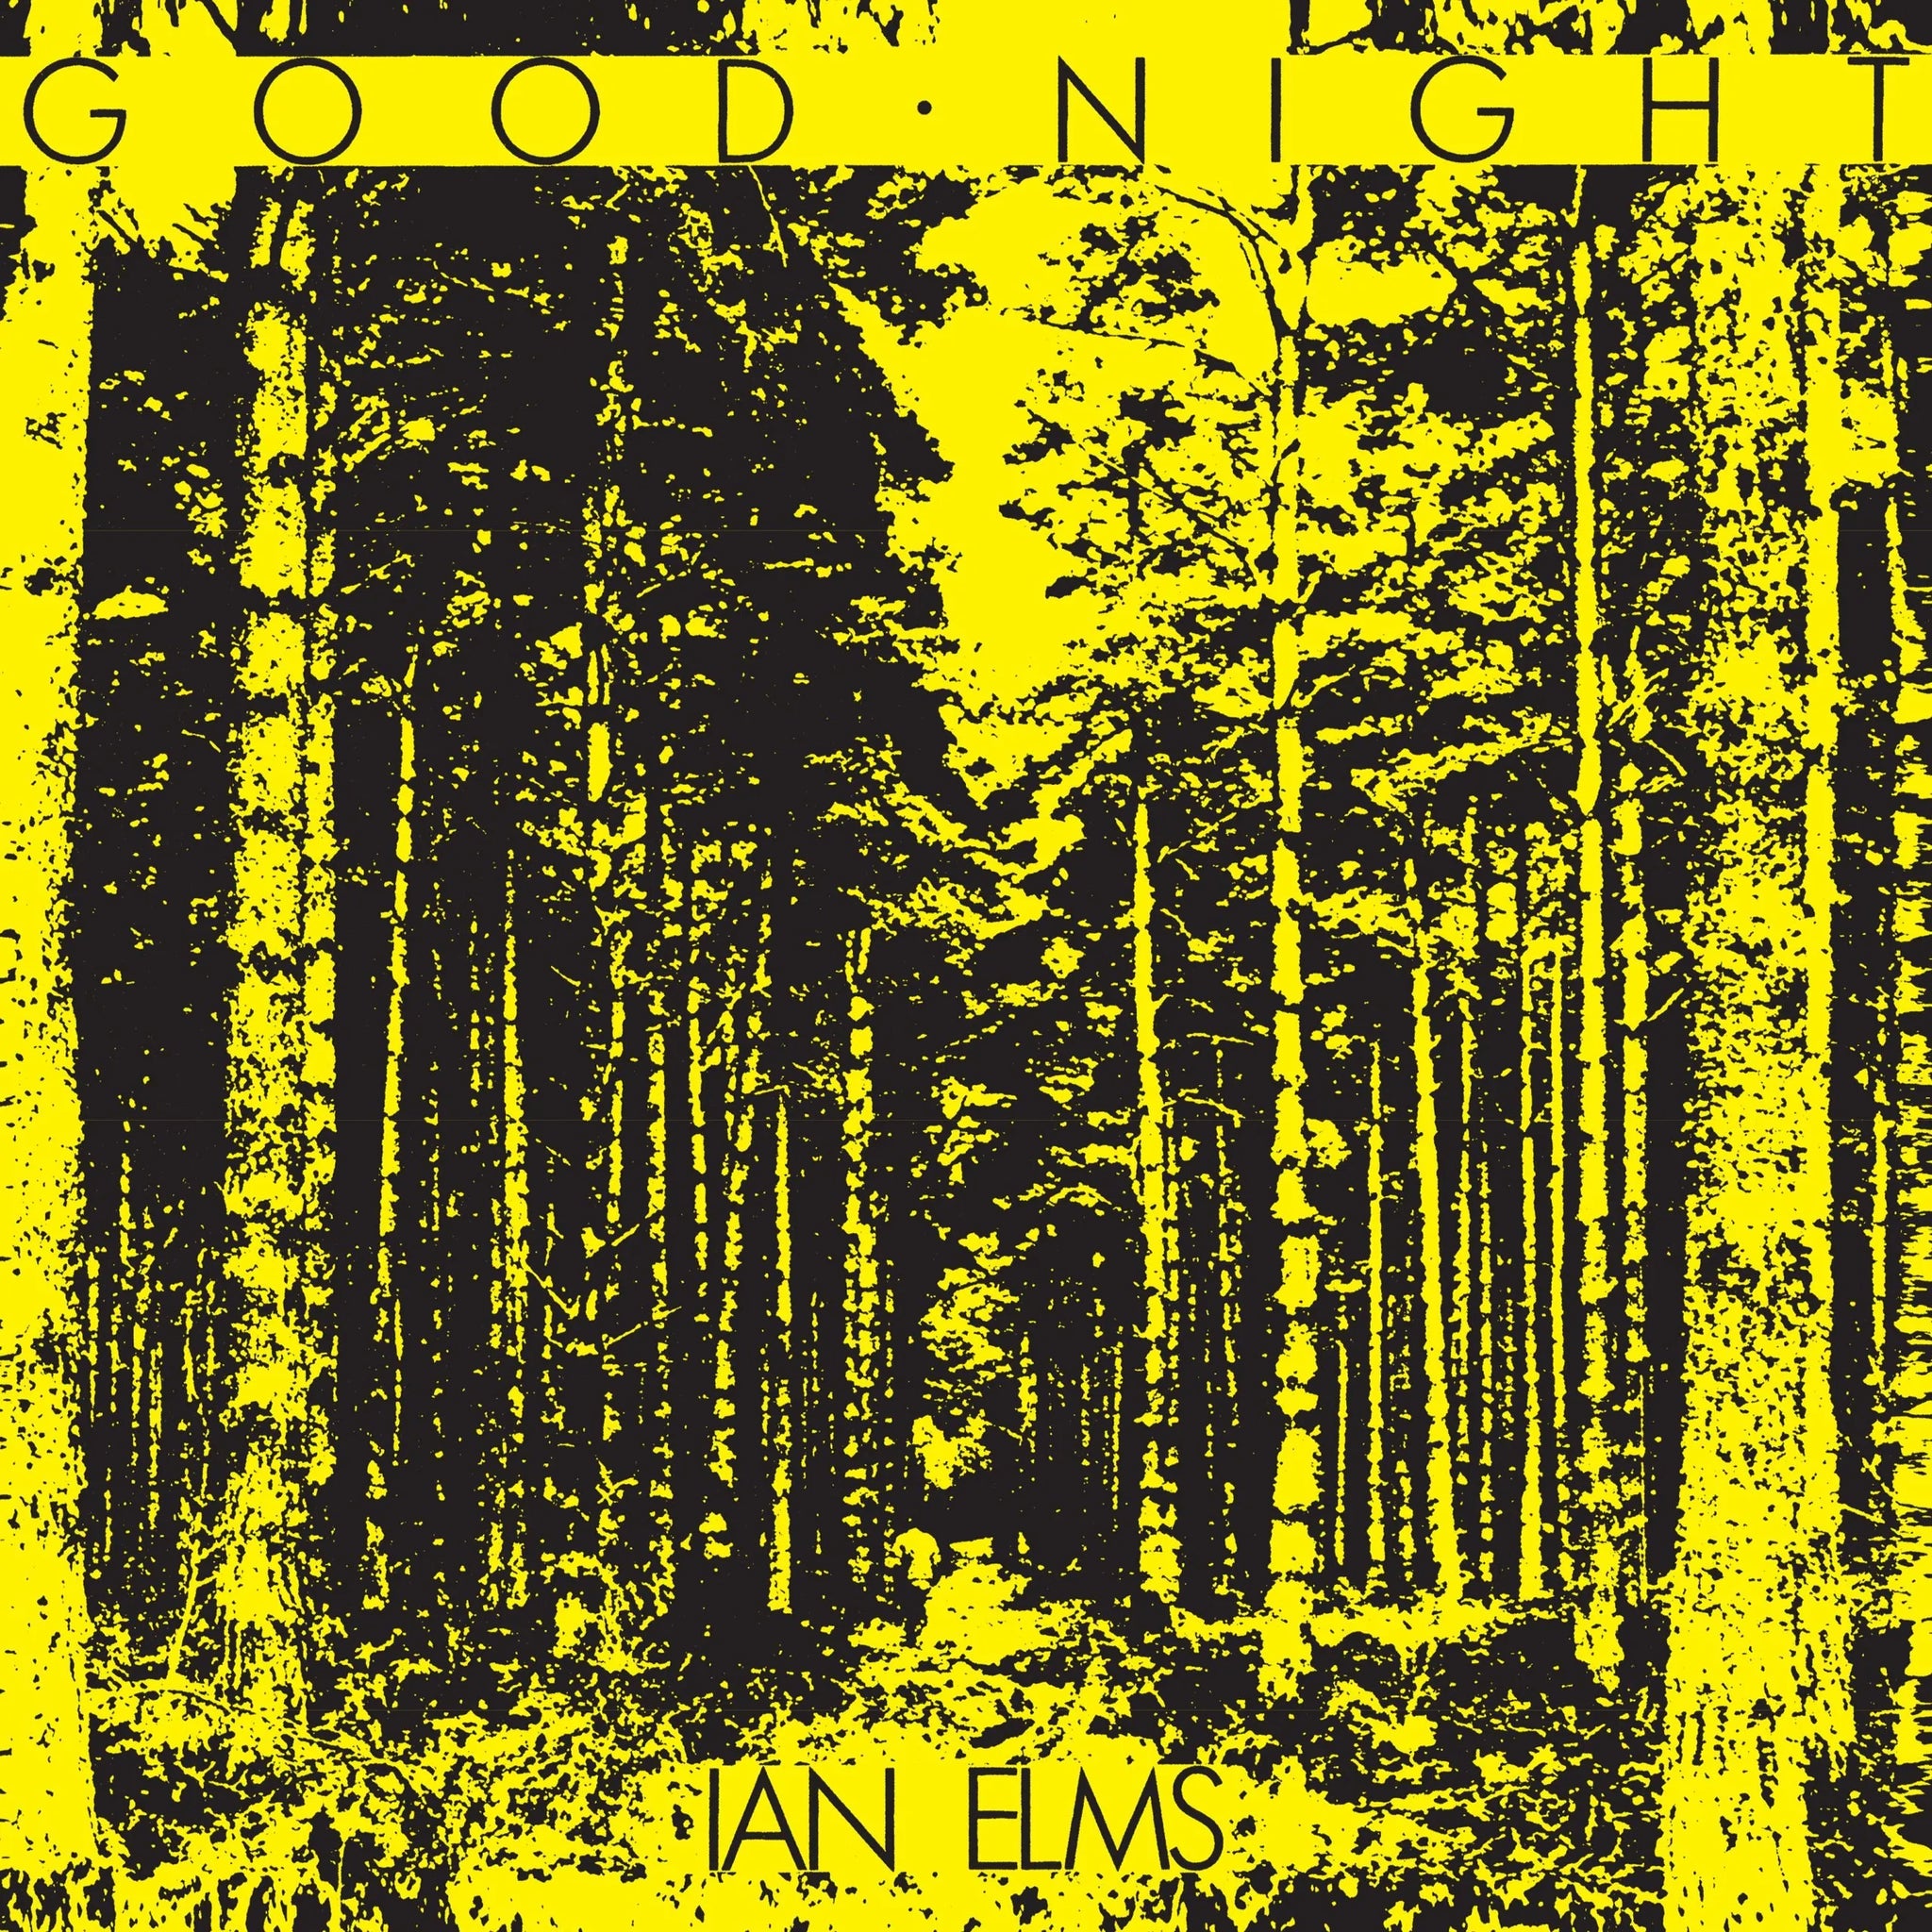 IAN ELMS - GOOD NIGHT Vinyl LP